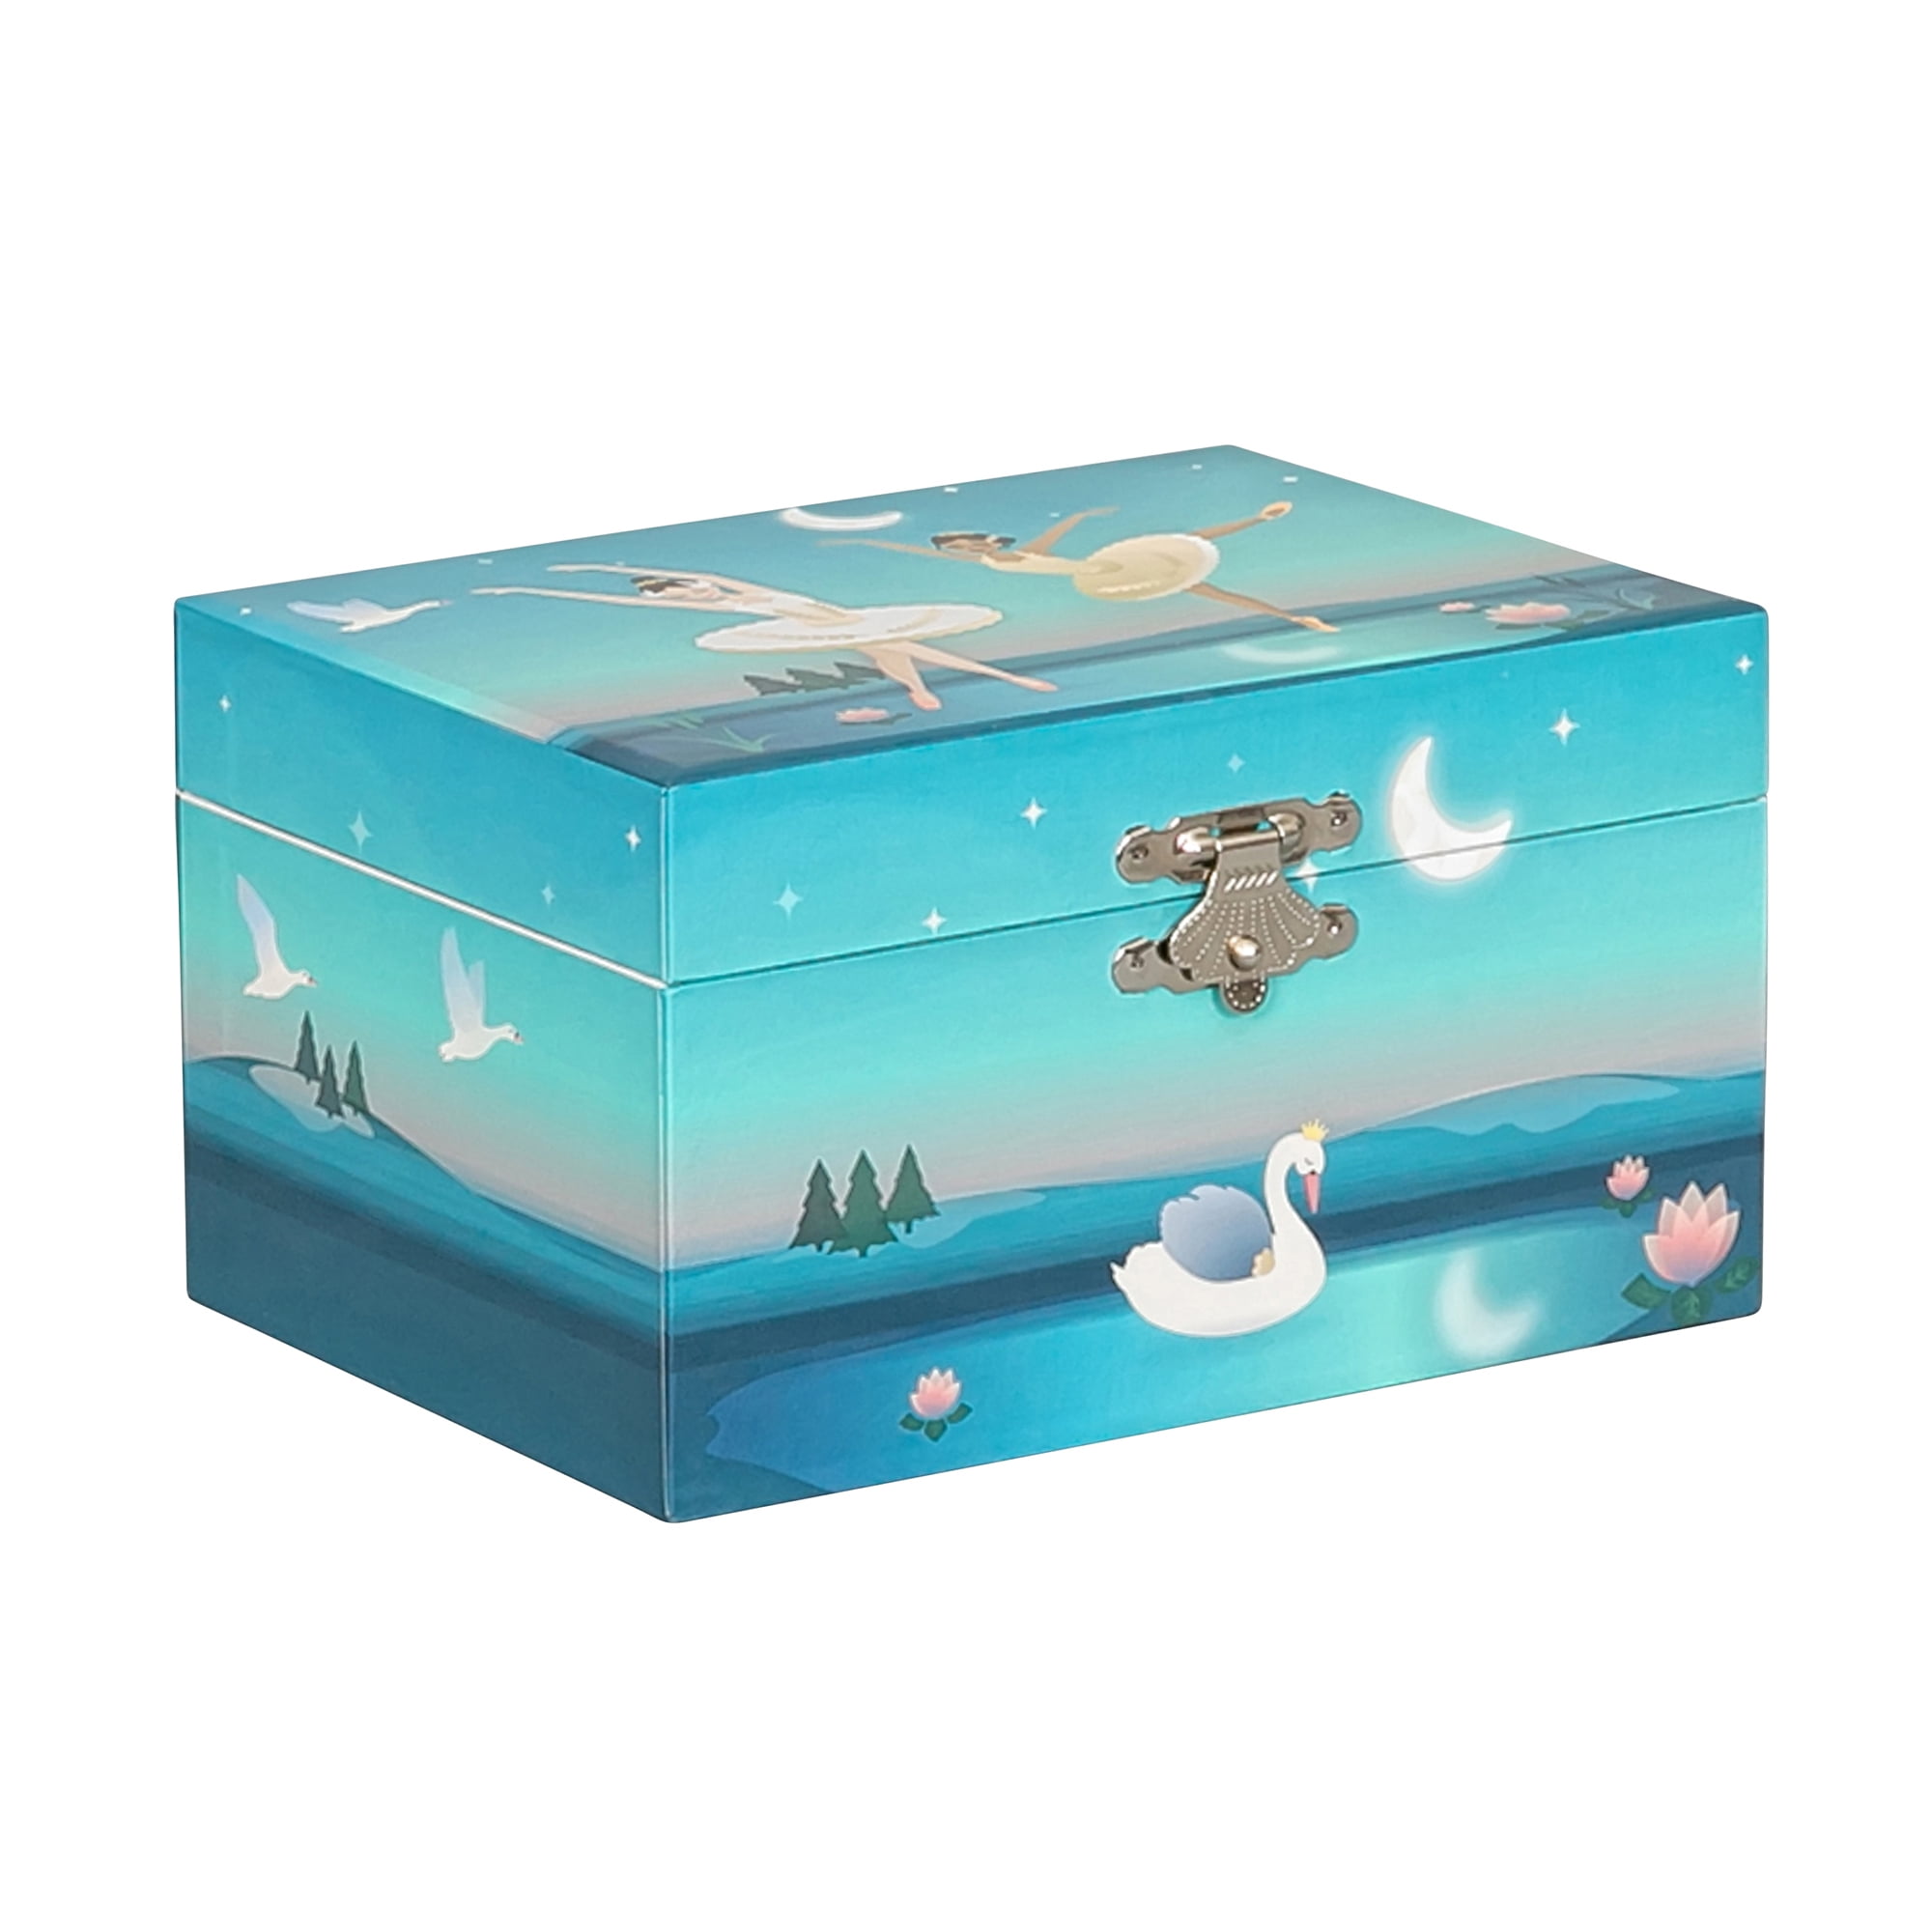 Glitter Design Swan La Jewelkeeper Musical Jewelry Box with Spinning Ballerina 